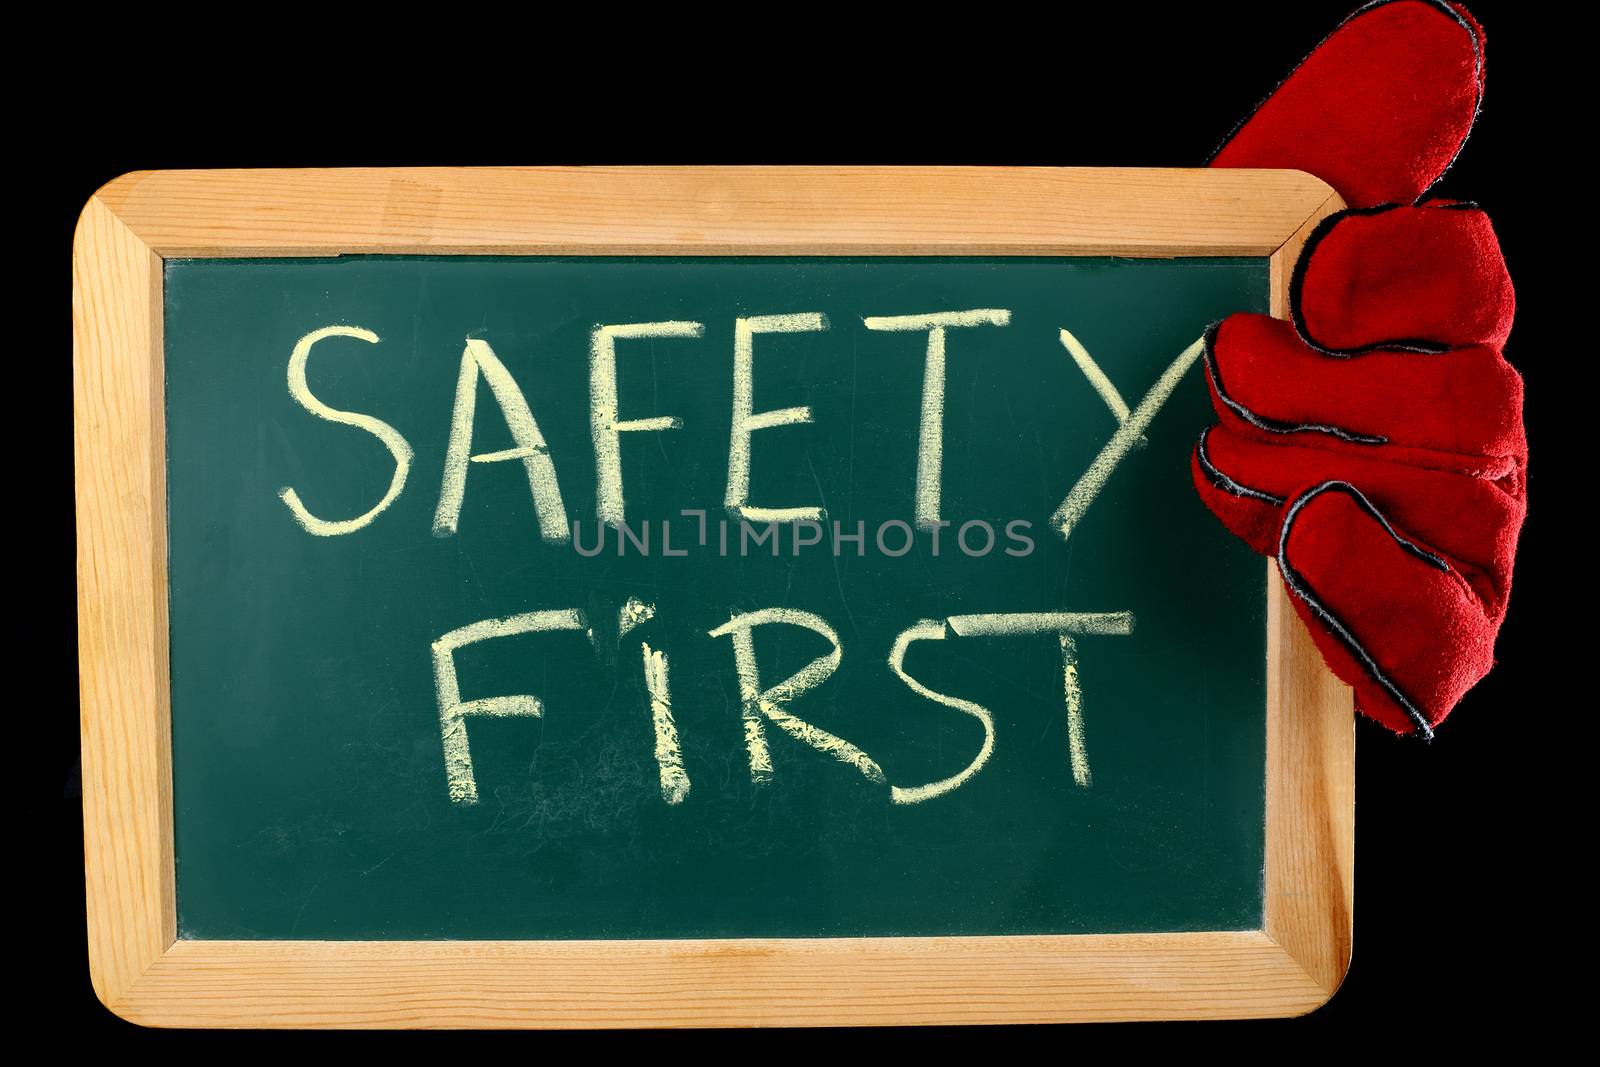 safety first concept by alexkosev